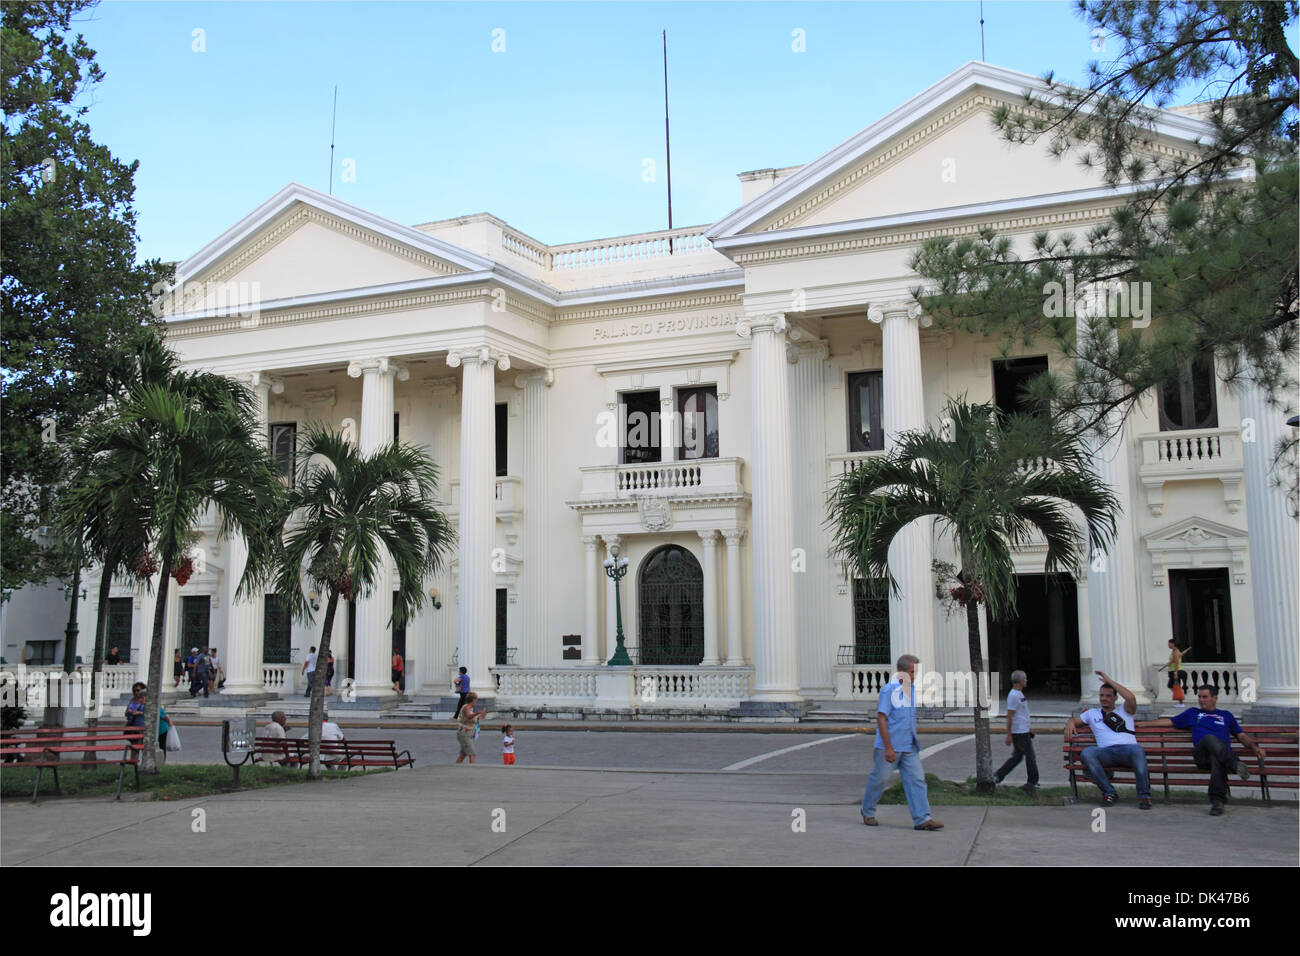 Biblioteca Provincial José Martí, Parque Leoncio Vidal, Santa Clara, Villa Clara province, Cuba, Caribbean Sea, Central America Stock Photo